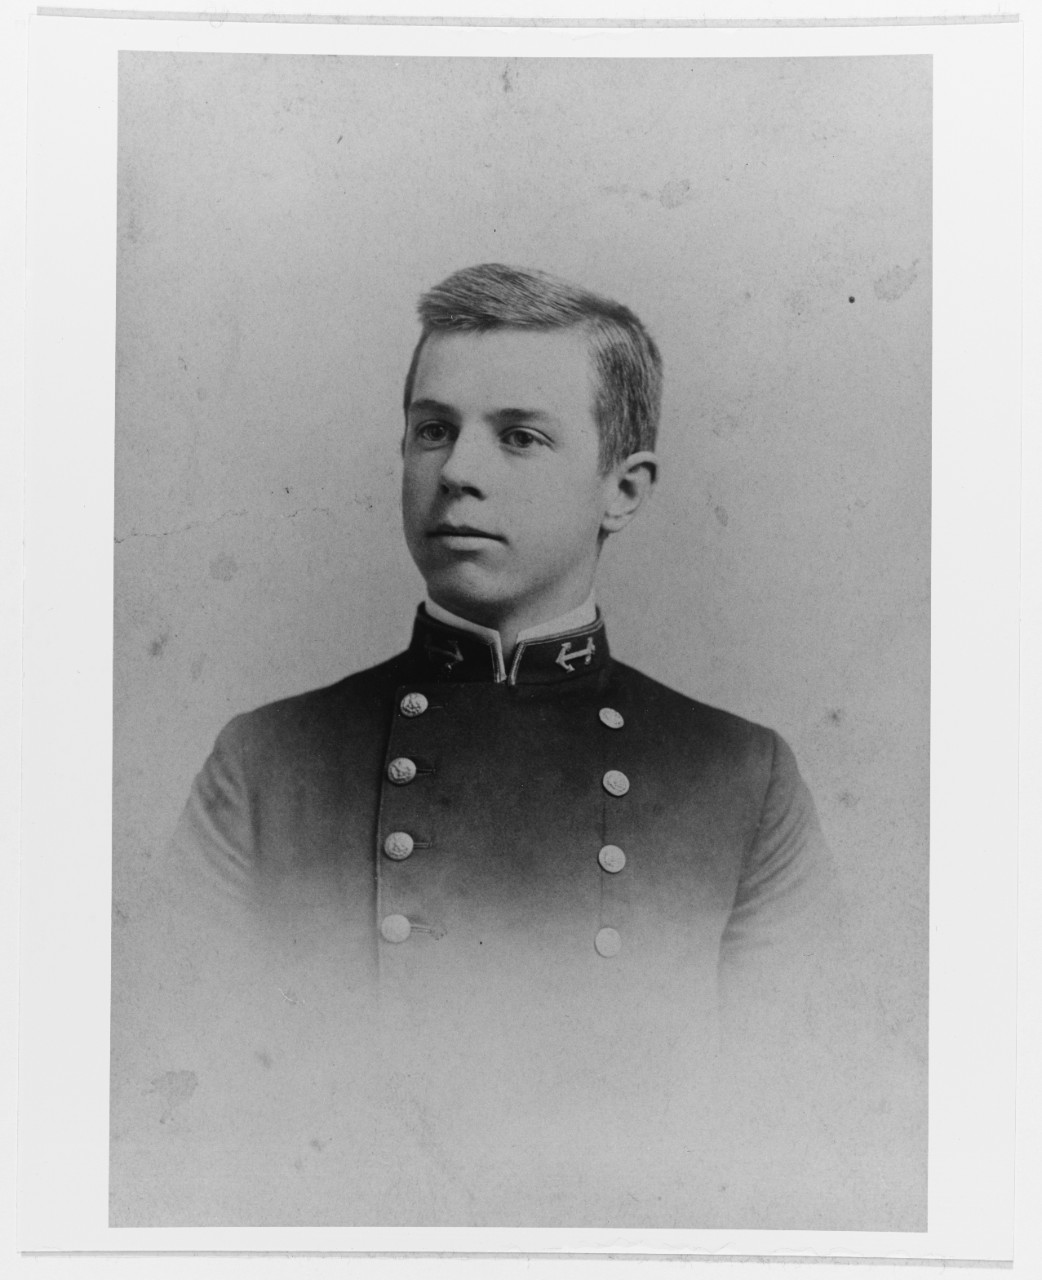 Midshipman Harry E. Yarnell, USN